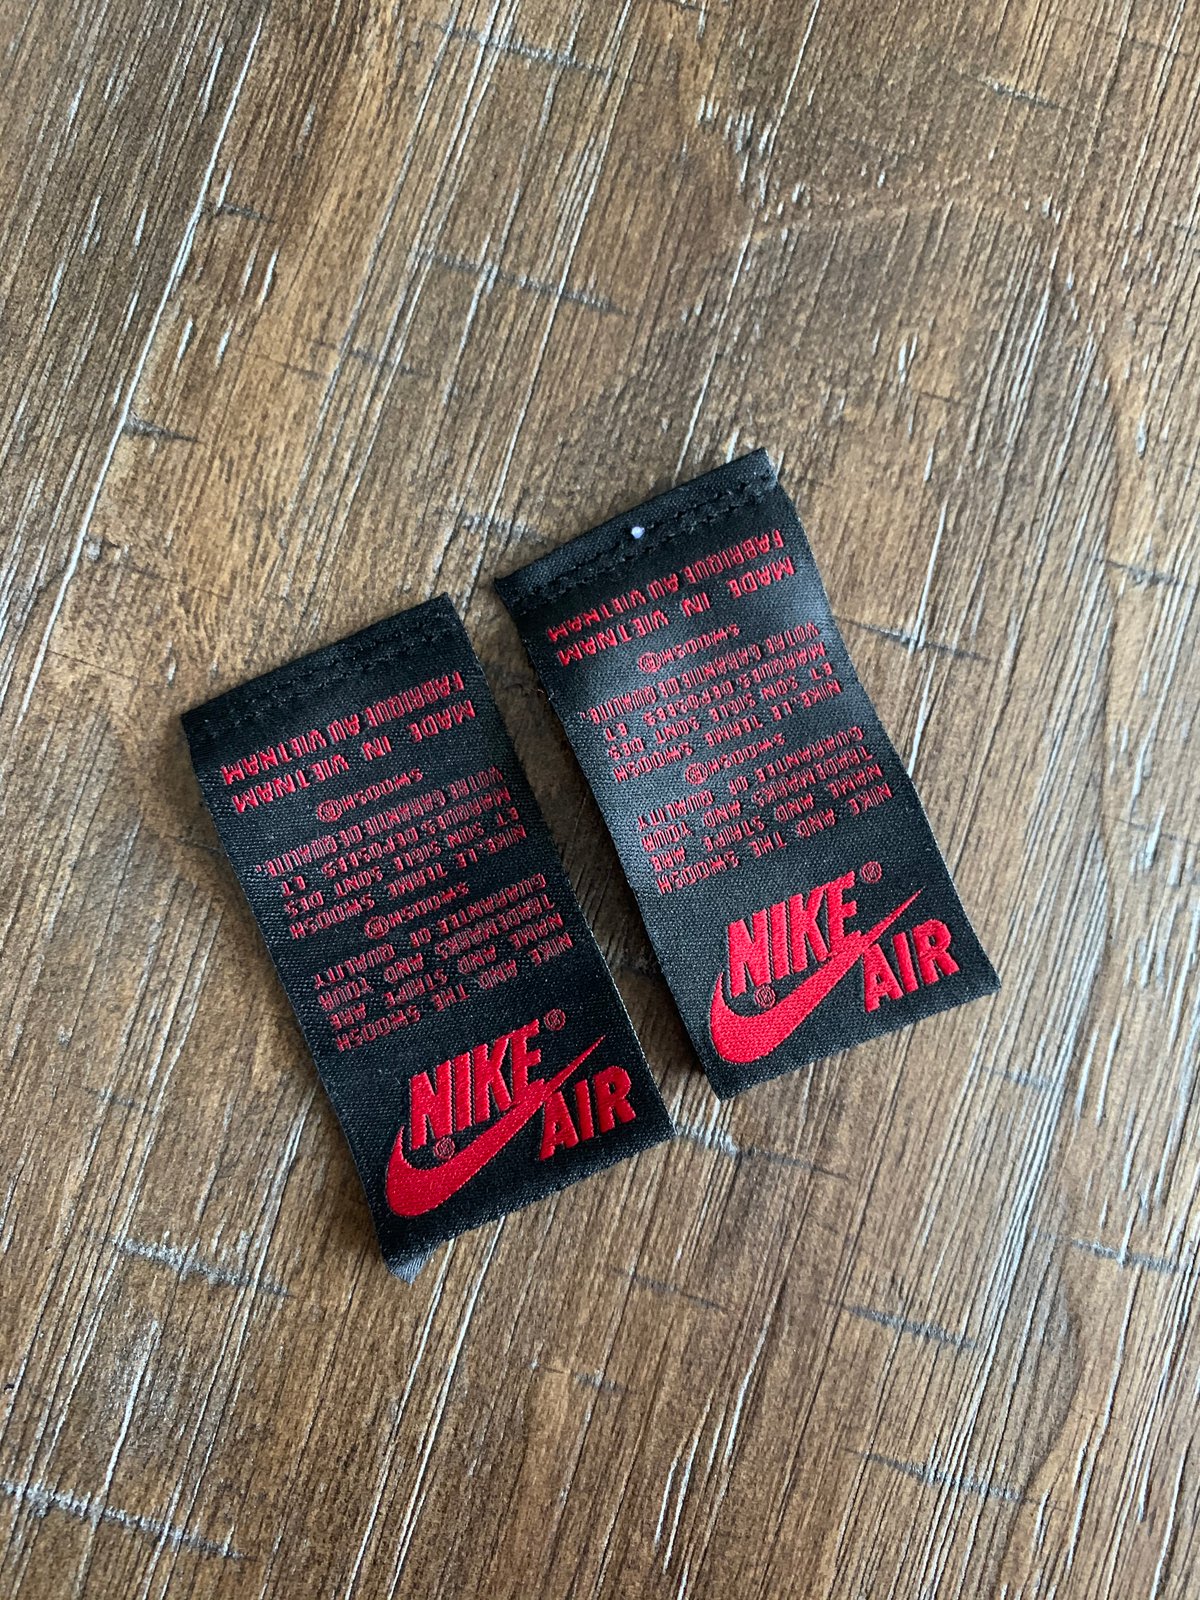 Nike Air tongue tags | SHOECHEF